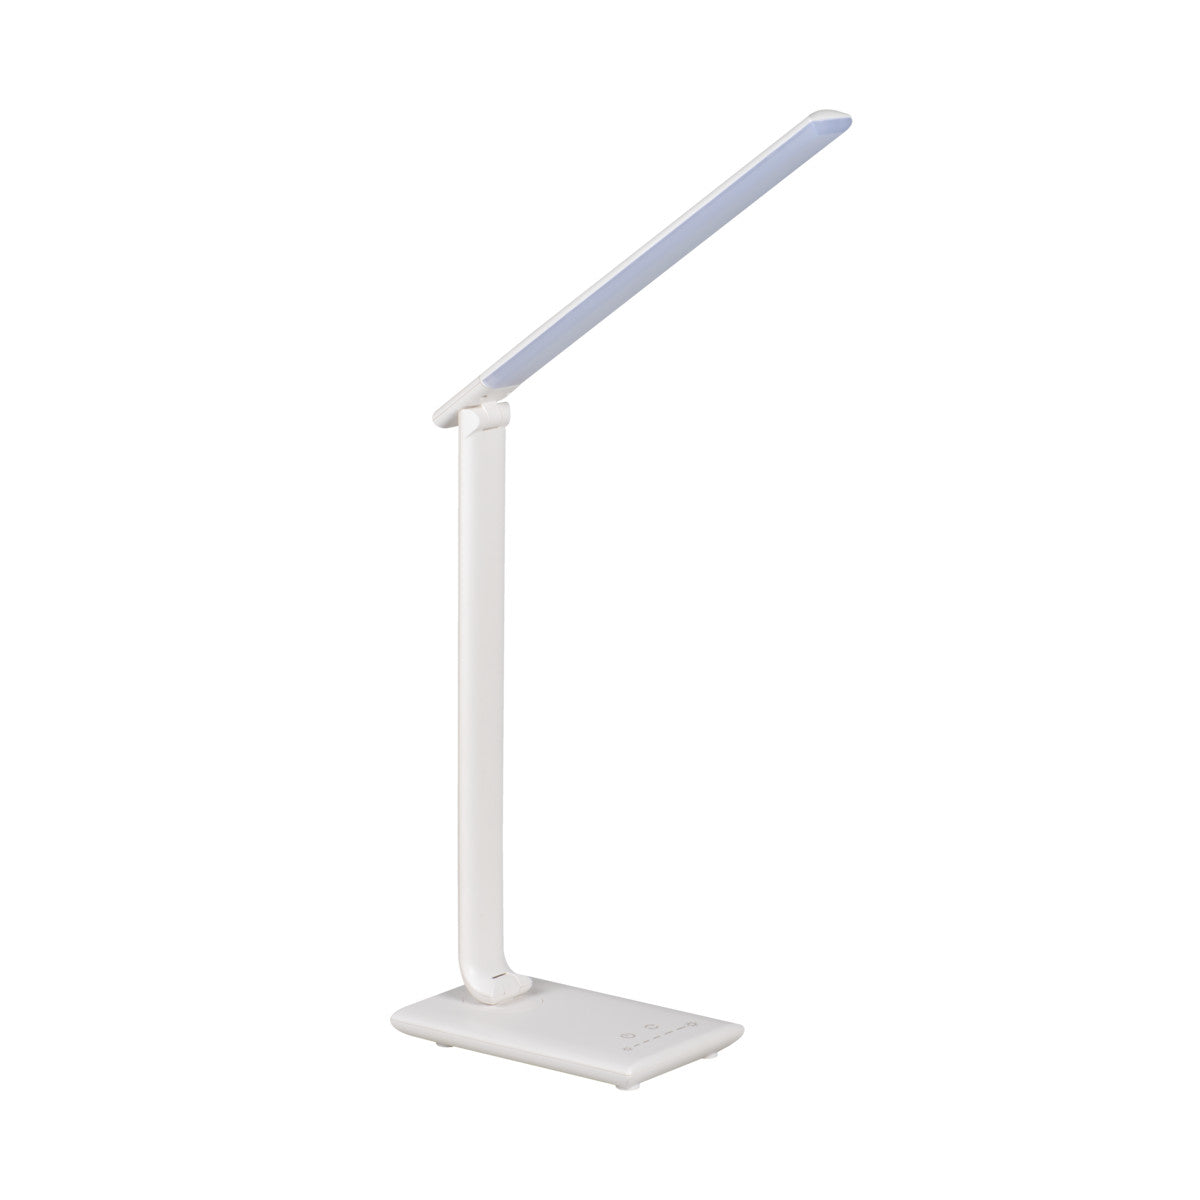 Kanlux PREDA LED 7W Desk Table Lamp Light CCT Adjustable with USB Port